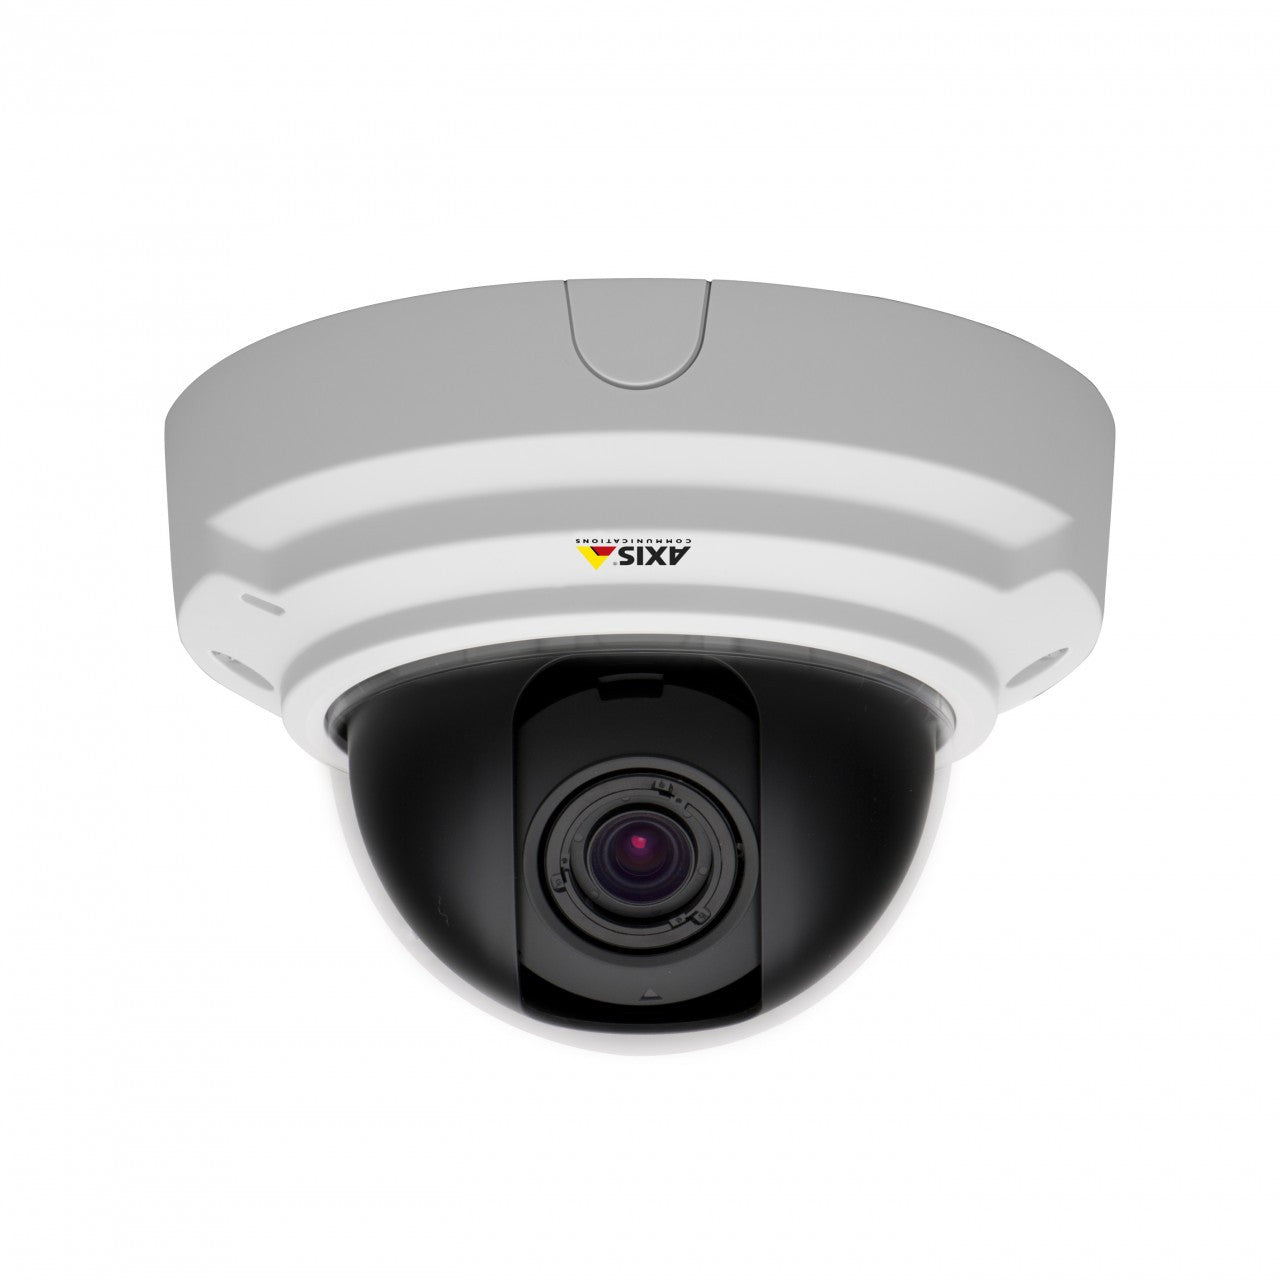 AXIS P3363-V (0508-001) Indoor Vandal Proof Network Camera